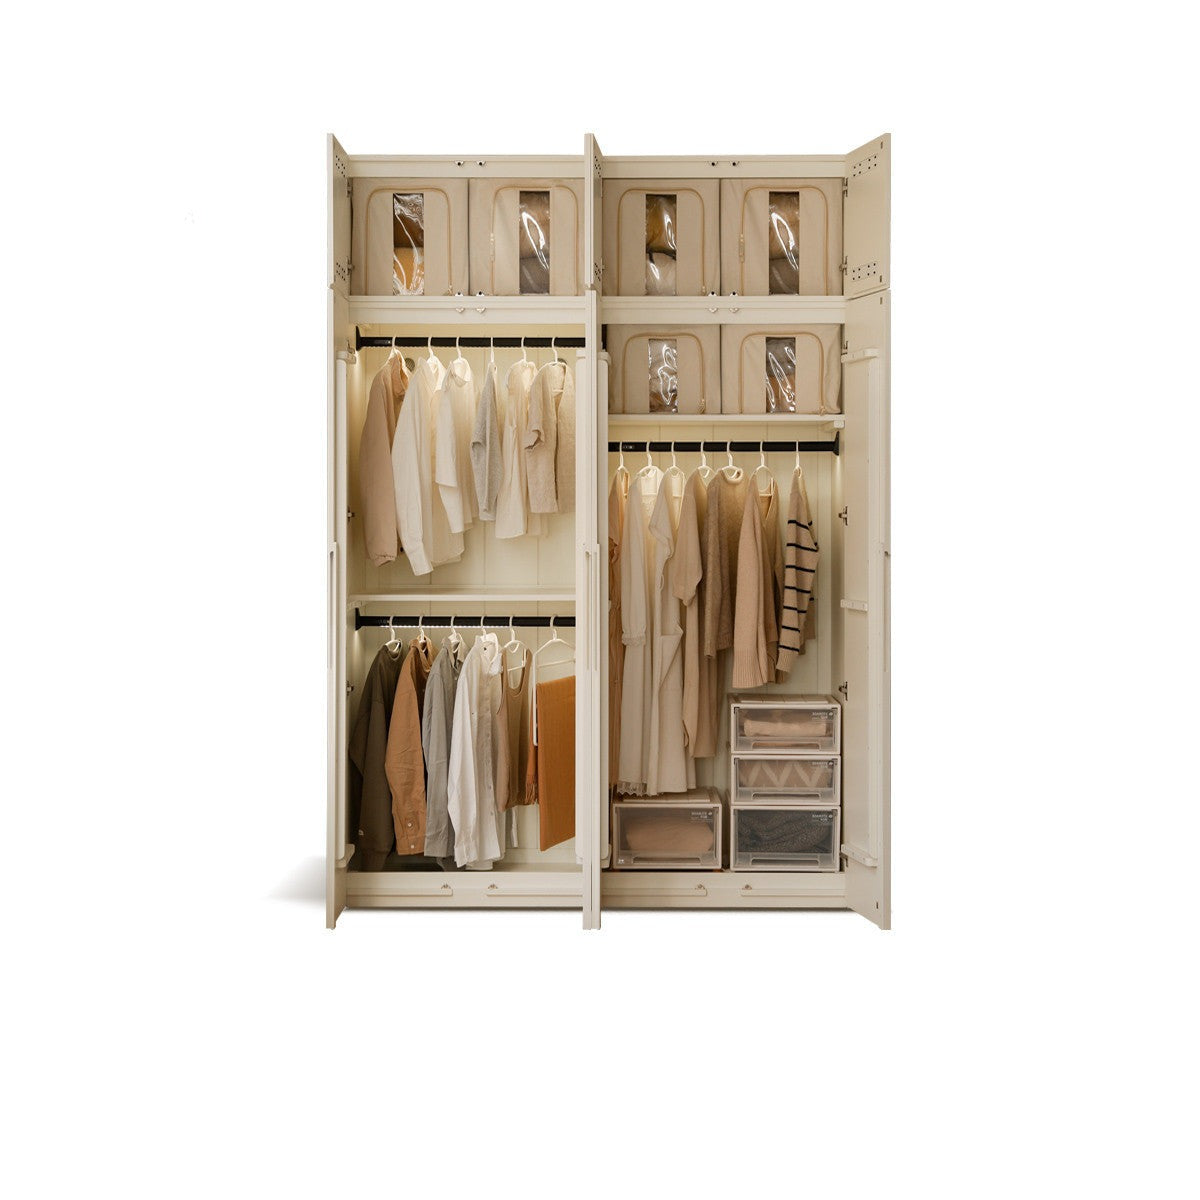 Solid wood cream wardrobe